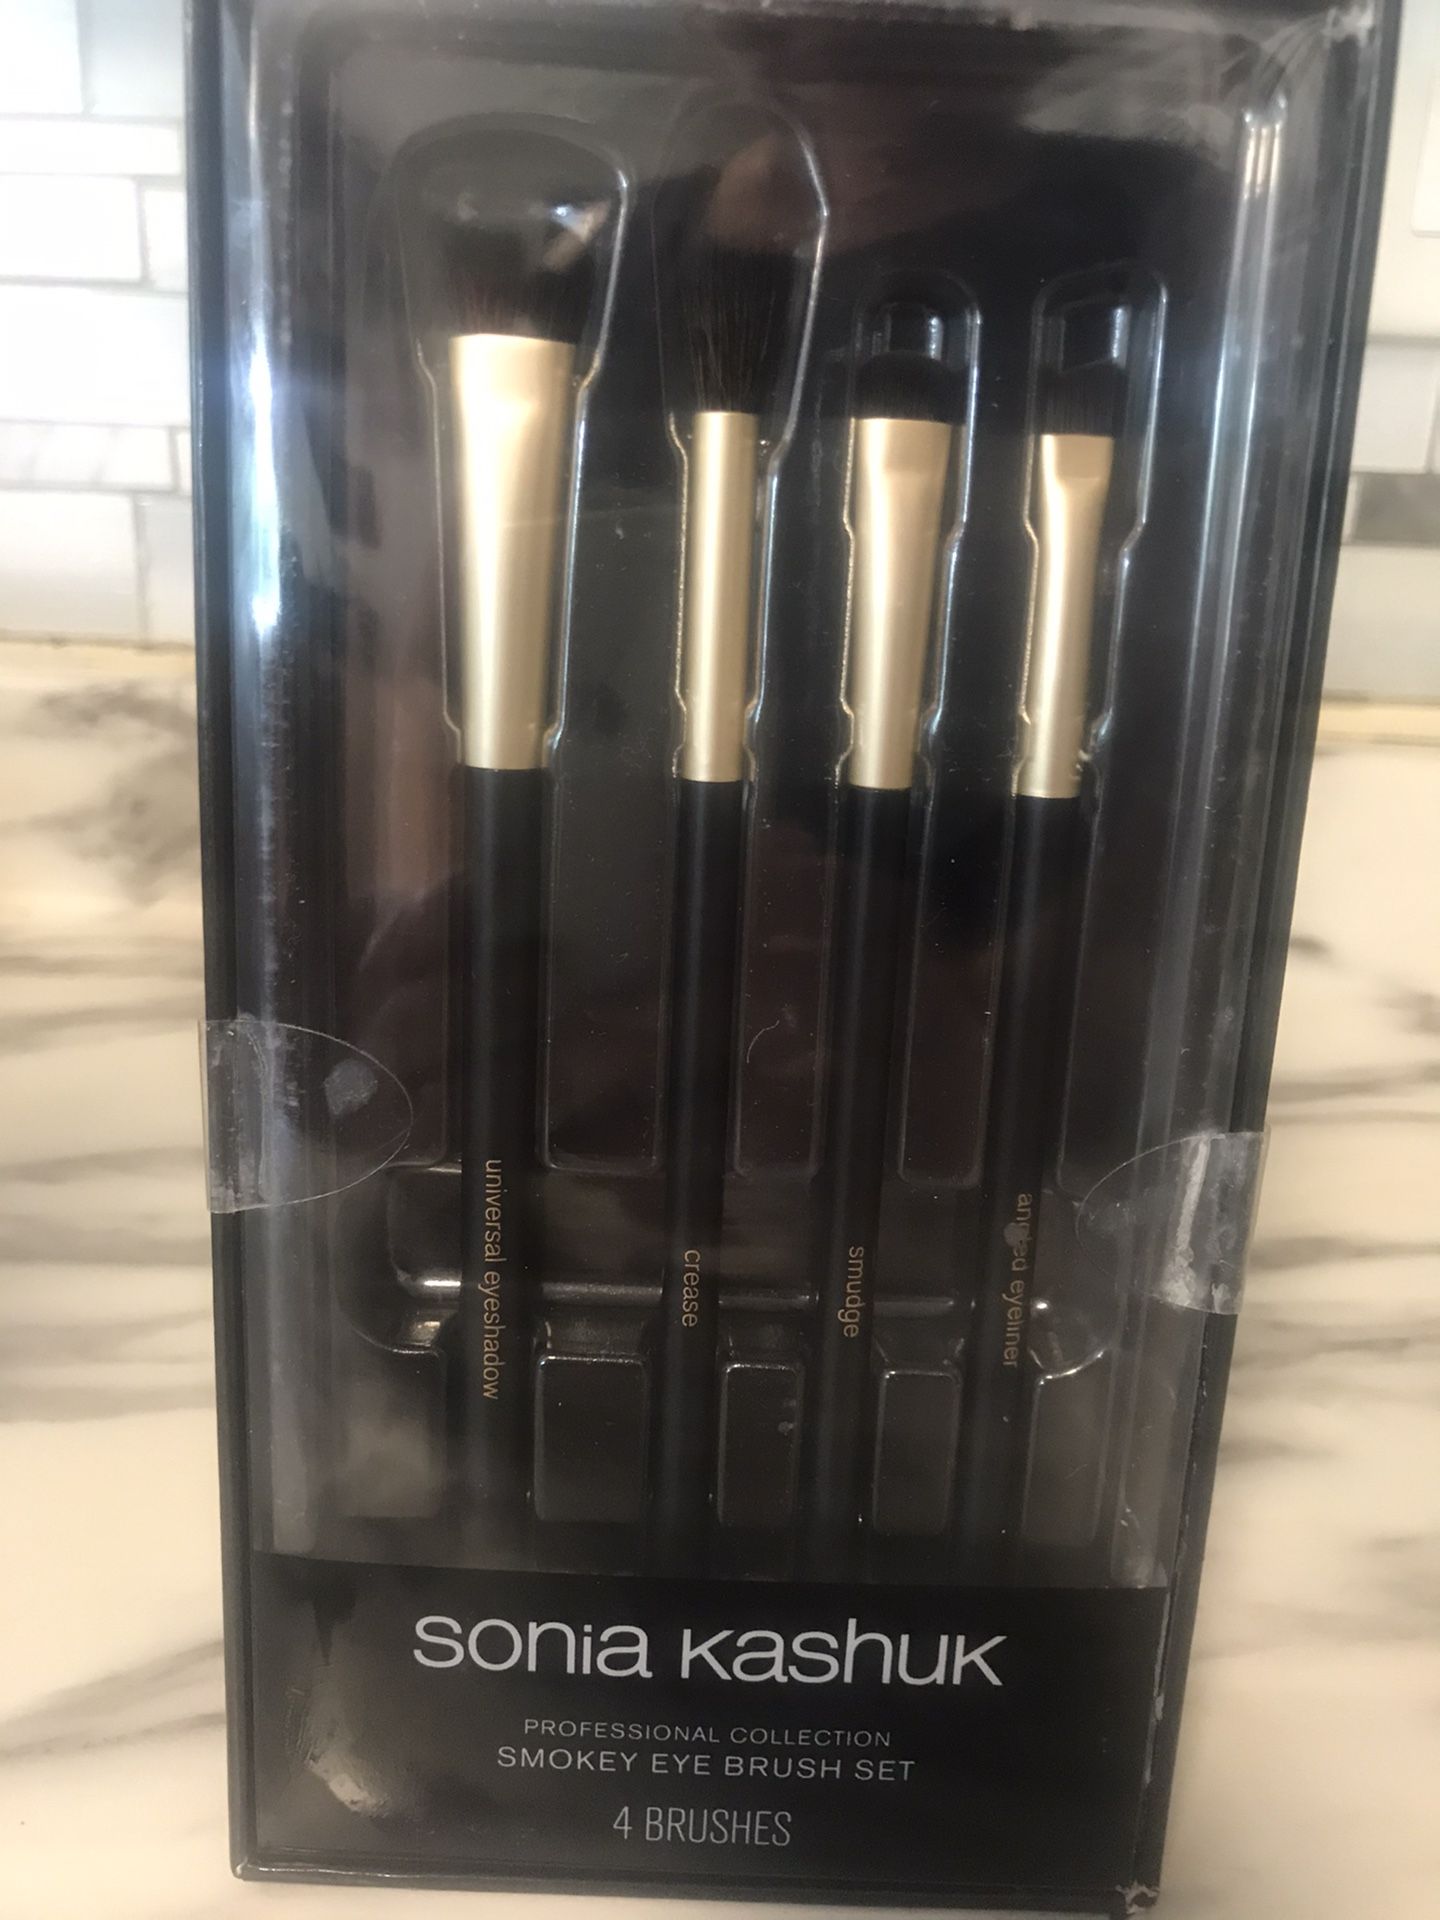 Sonia kashuk makup brushes